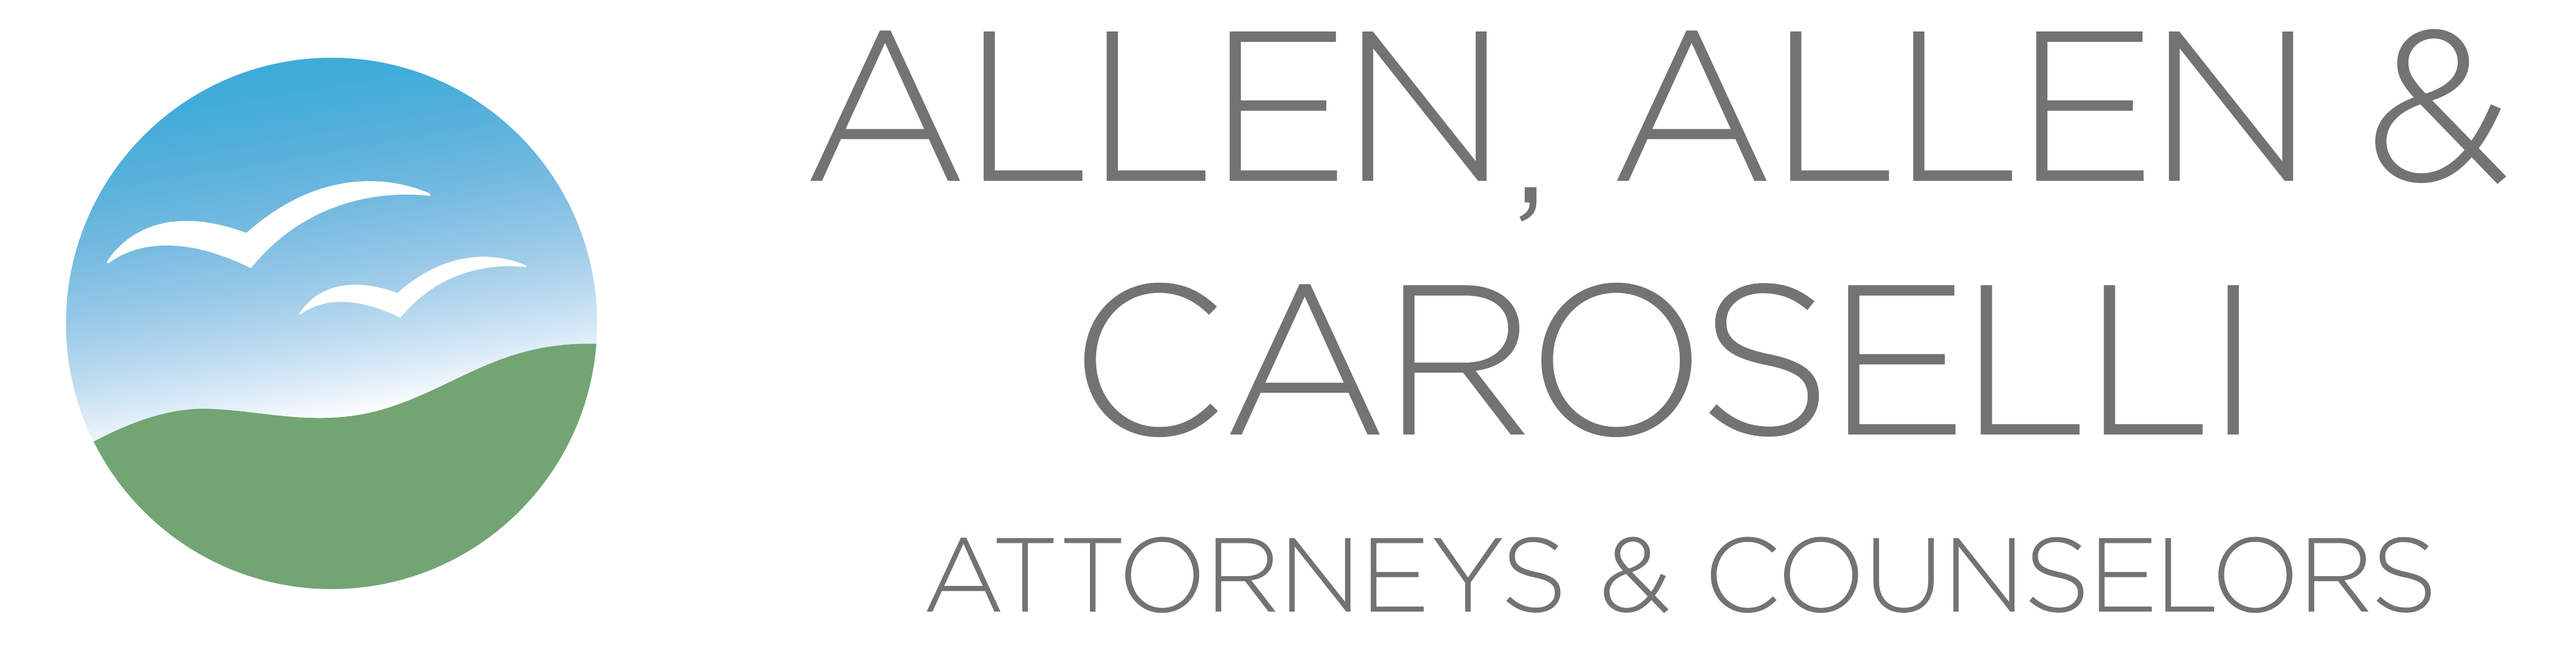 Allen, Allen & Caroselli